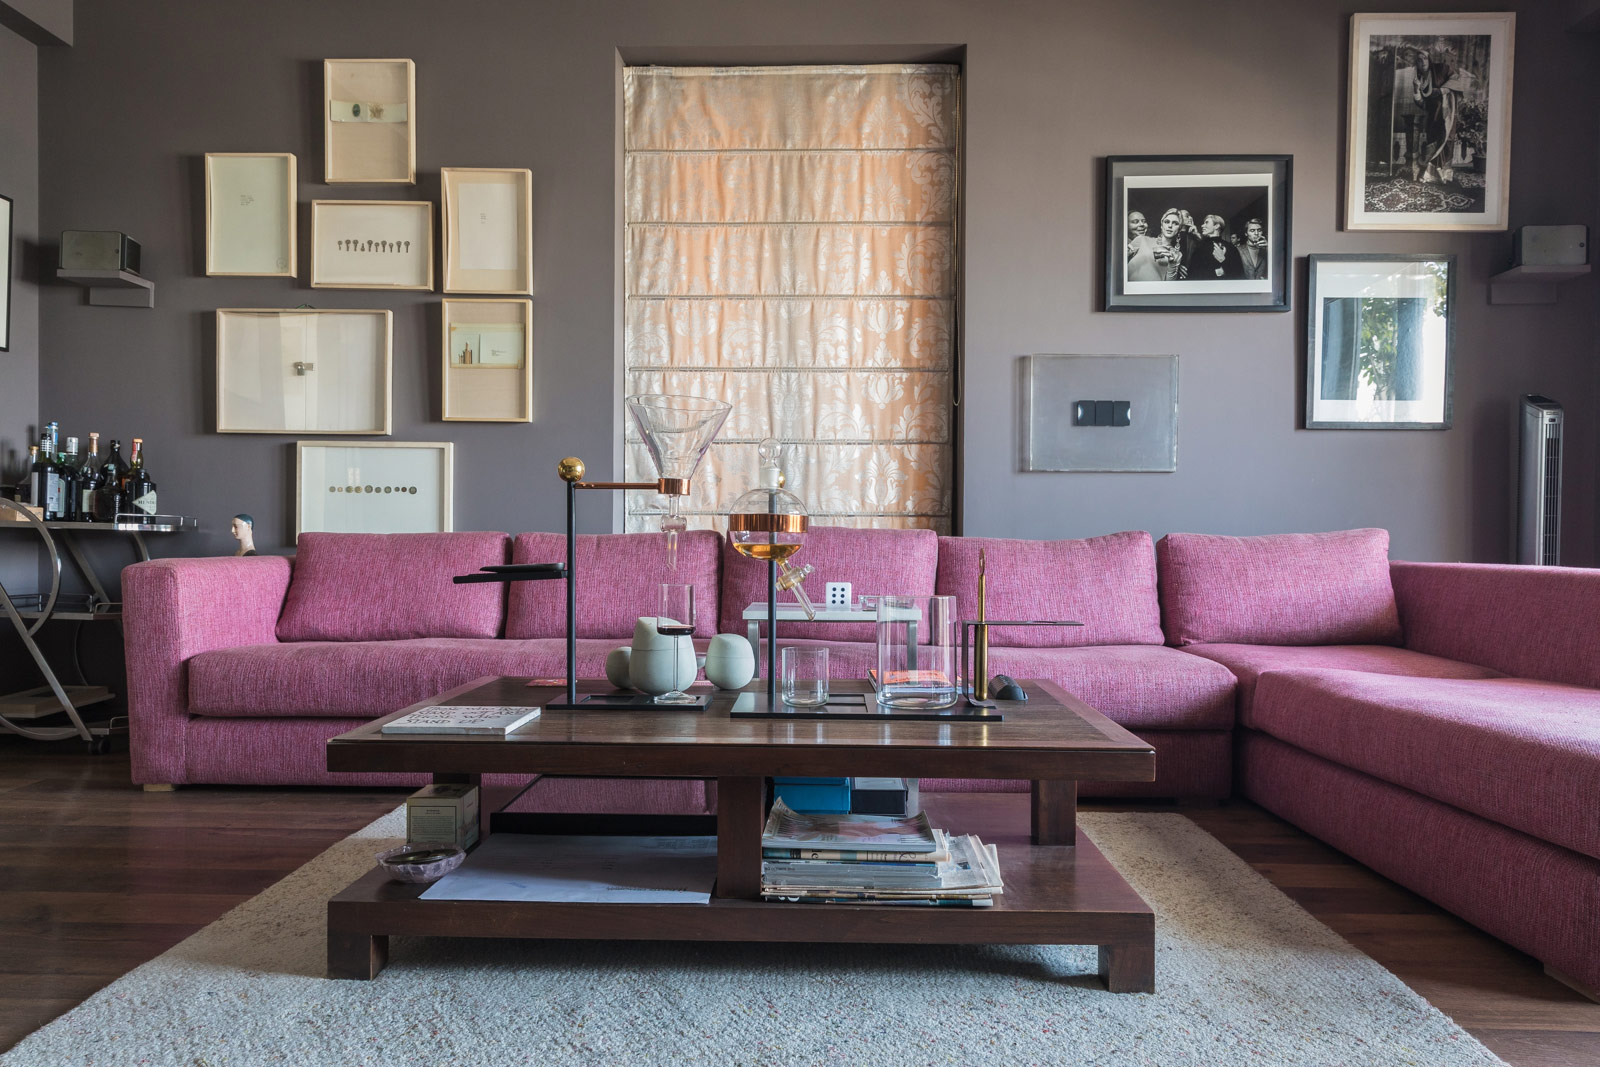 Modern Living Room Design in Light Grey & L shaped Sofa - Beautiful Homes